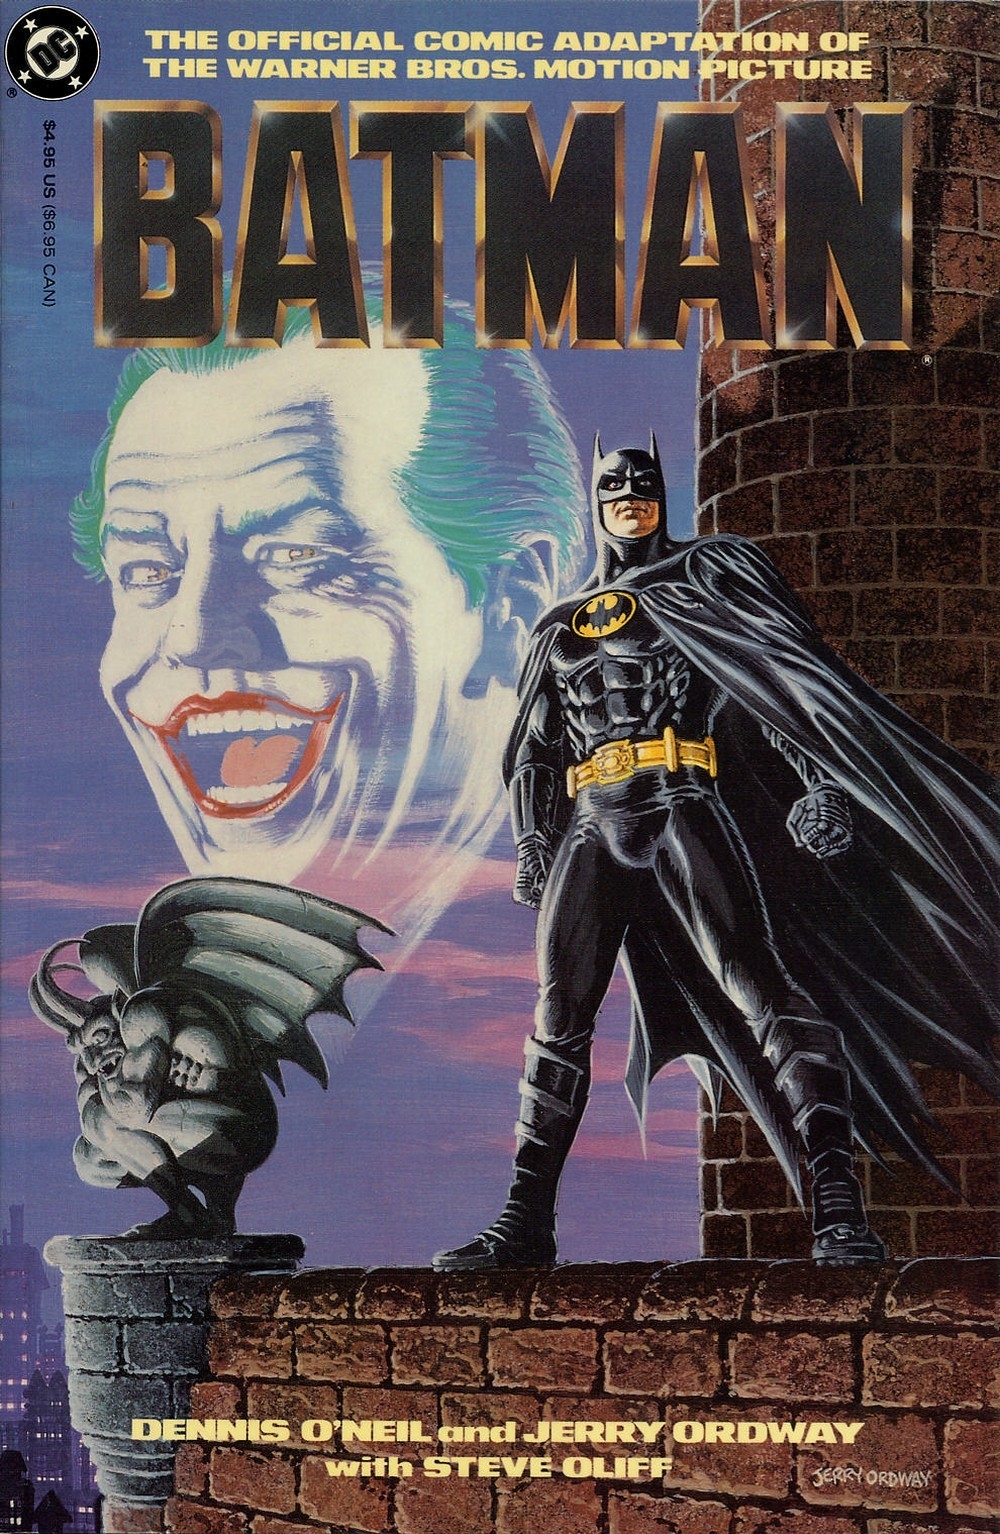 BatmanMovie1989ComicAdaptation